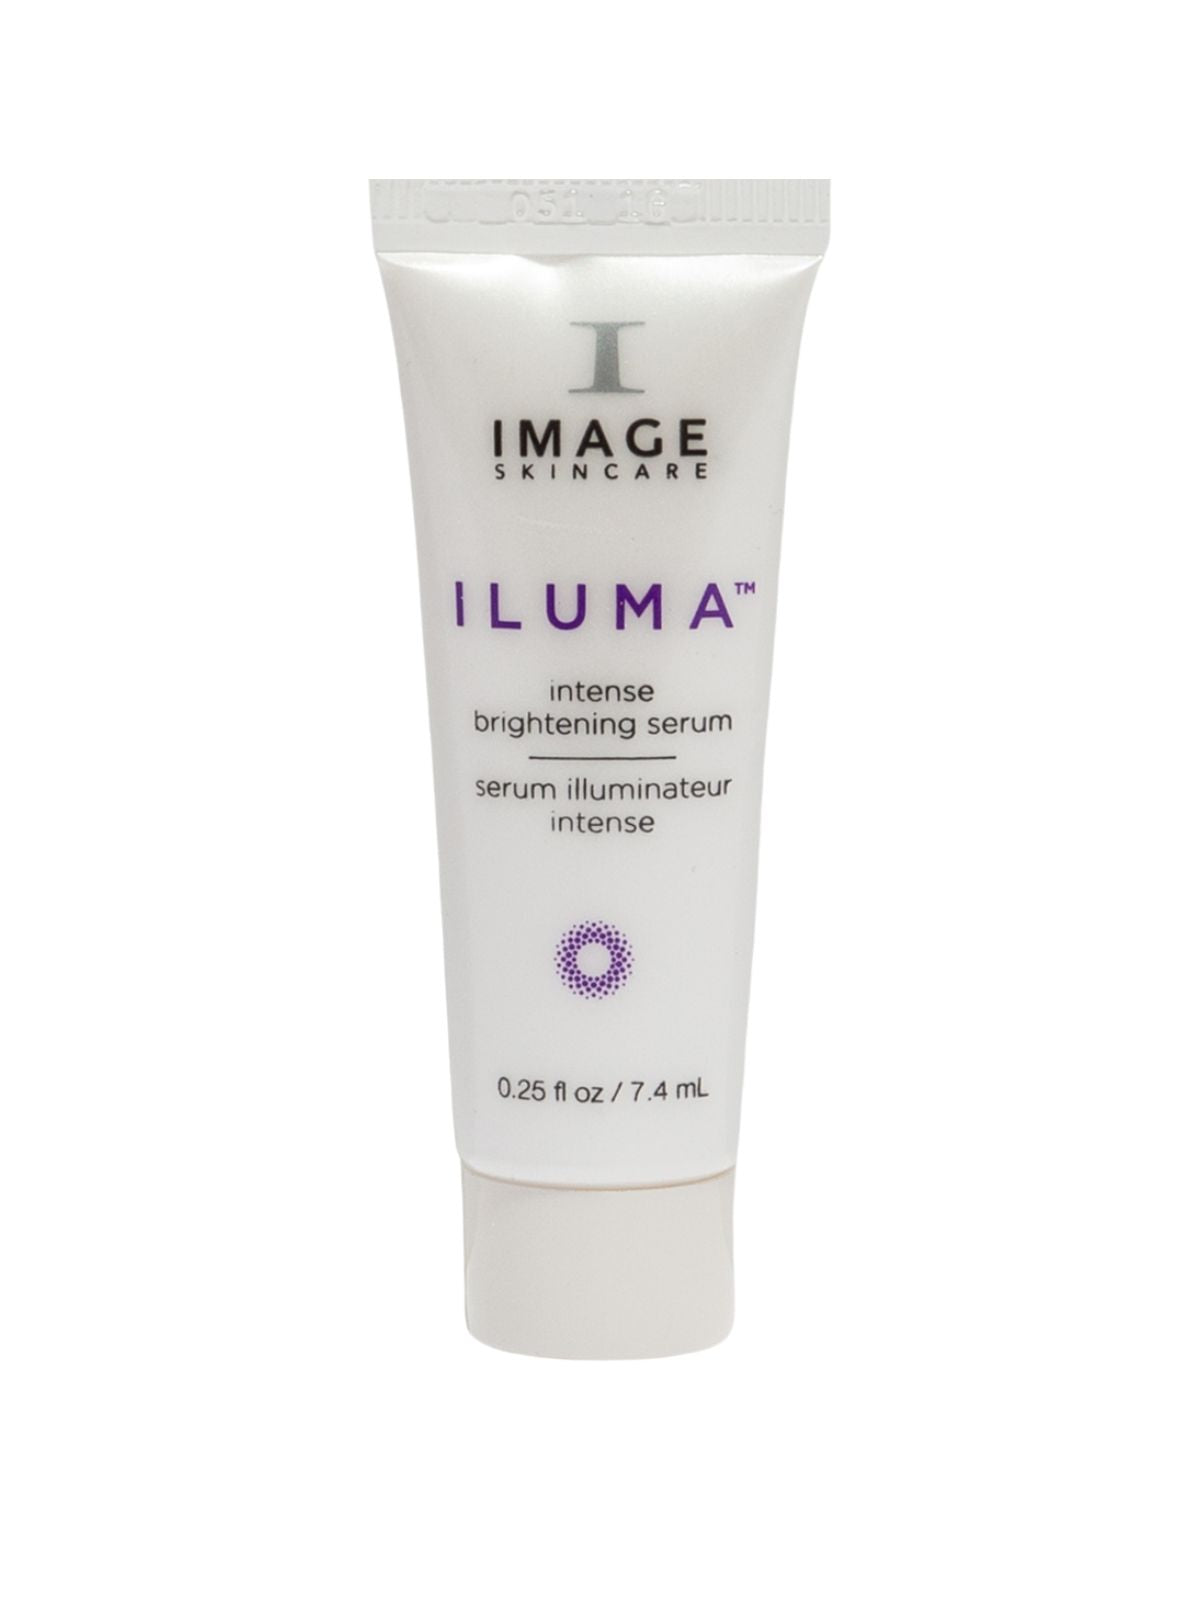 Image Skincare Iluma Intense Brightening Serum 7.4ml